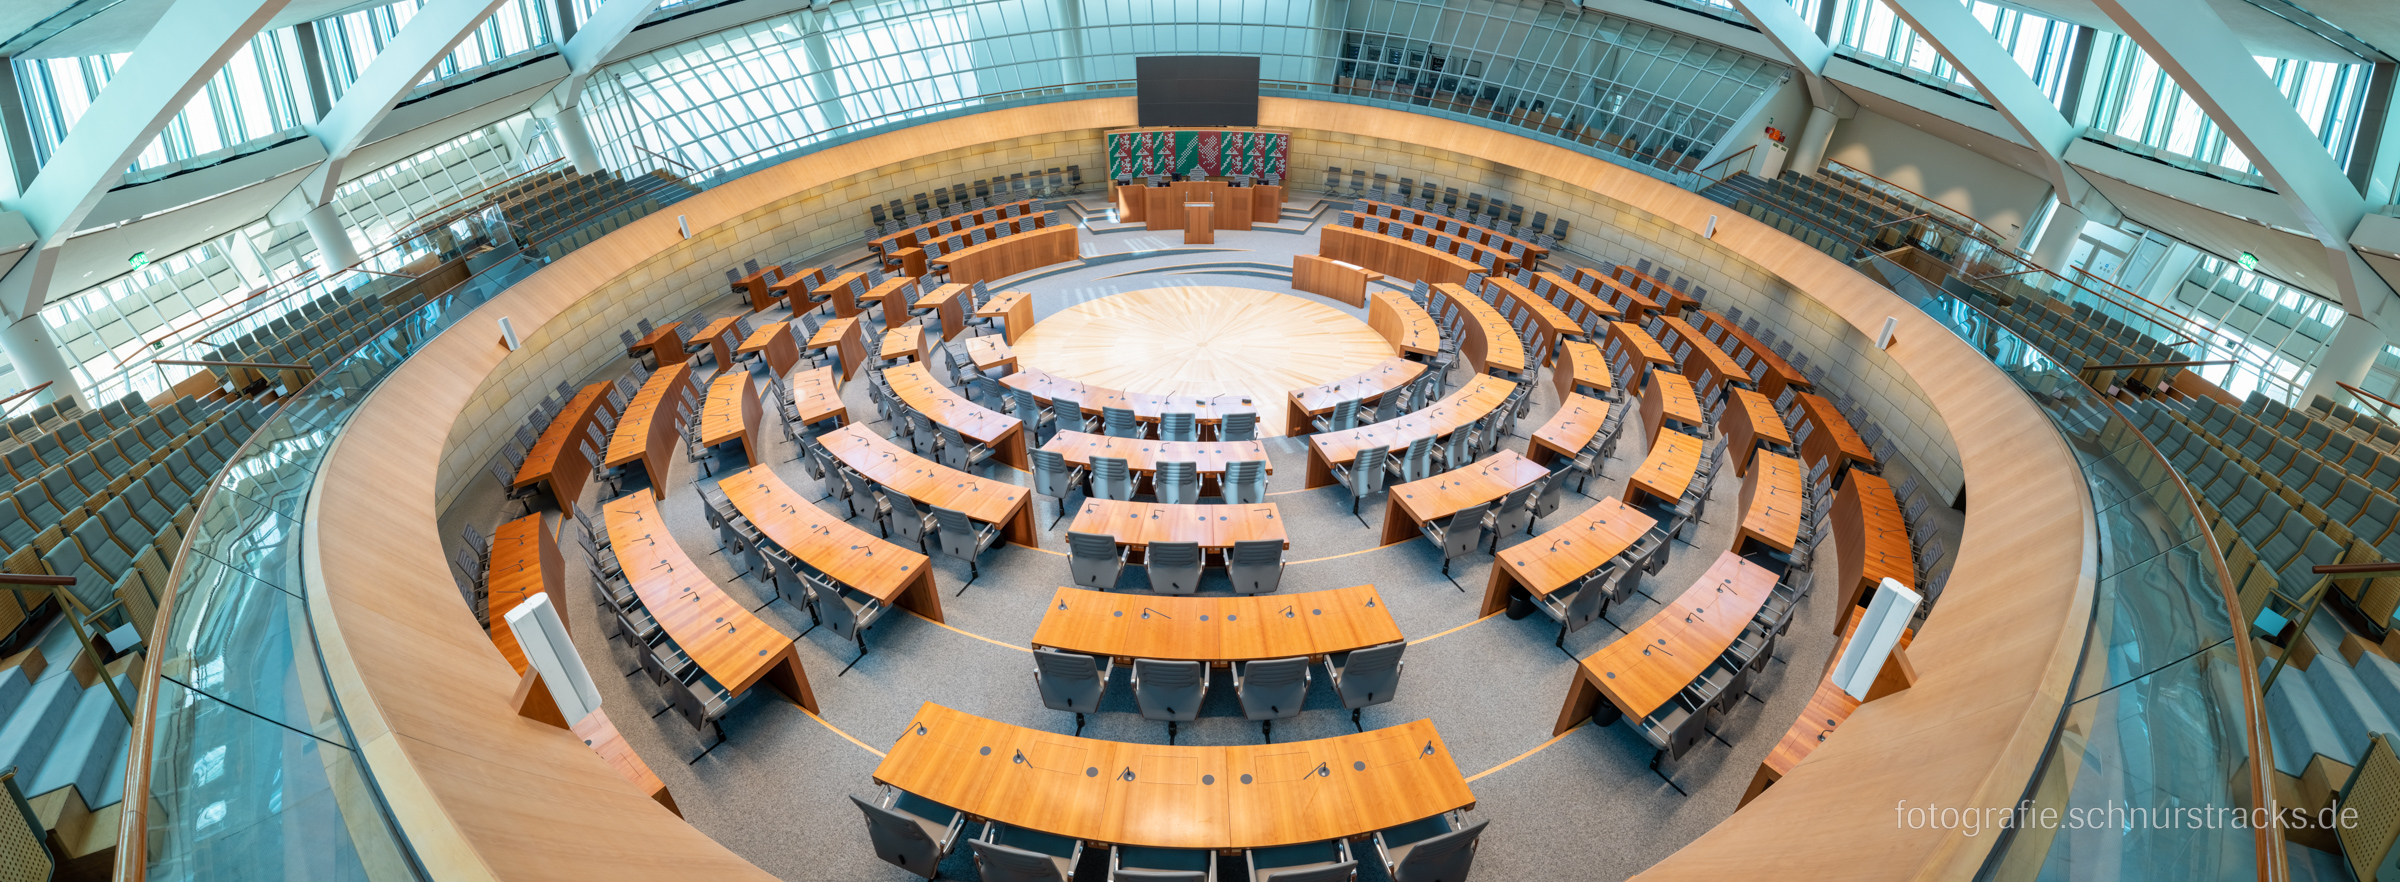 Plenarsaal Landtag NRW Panorama